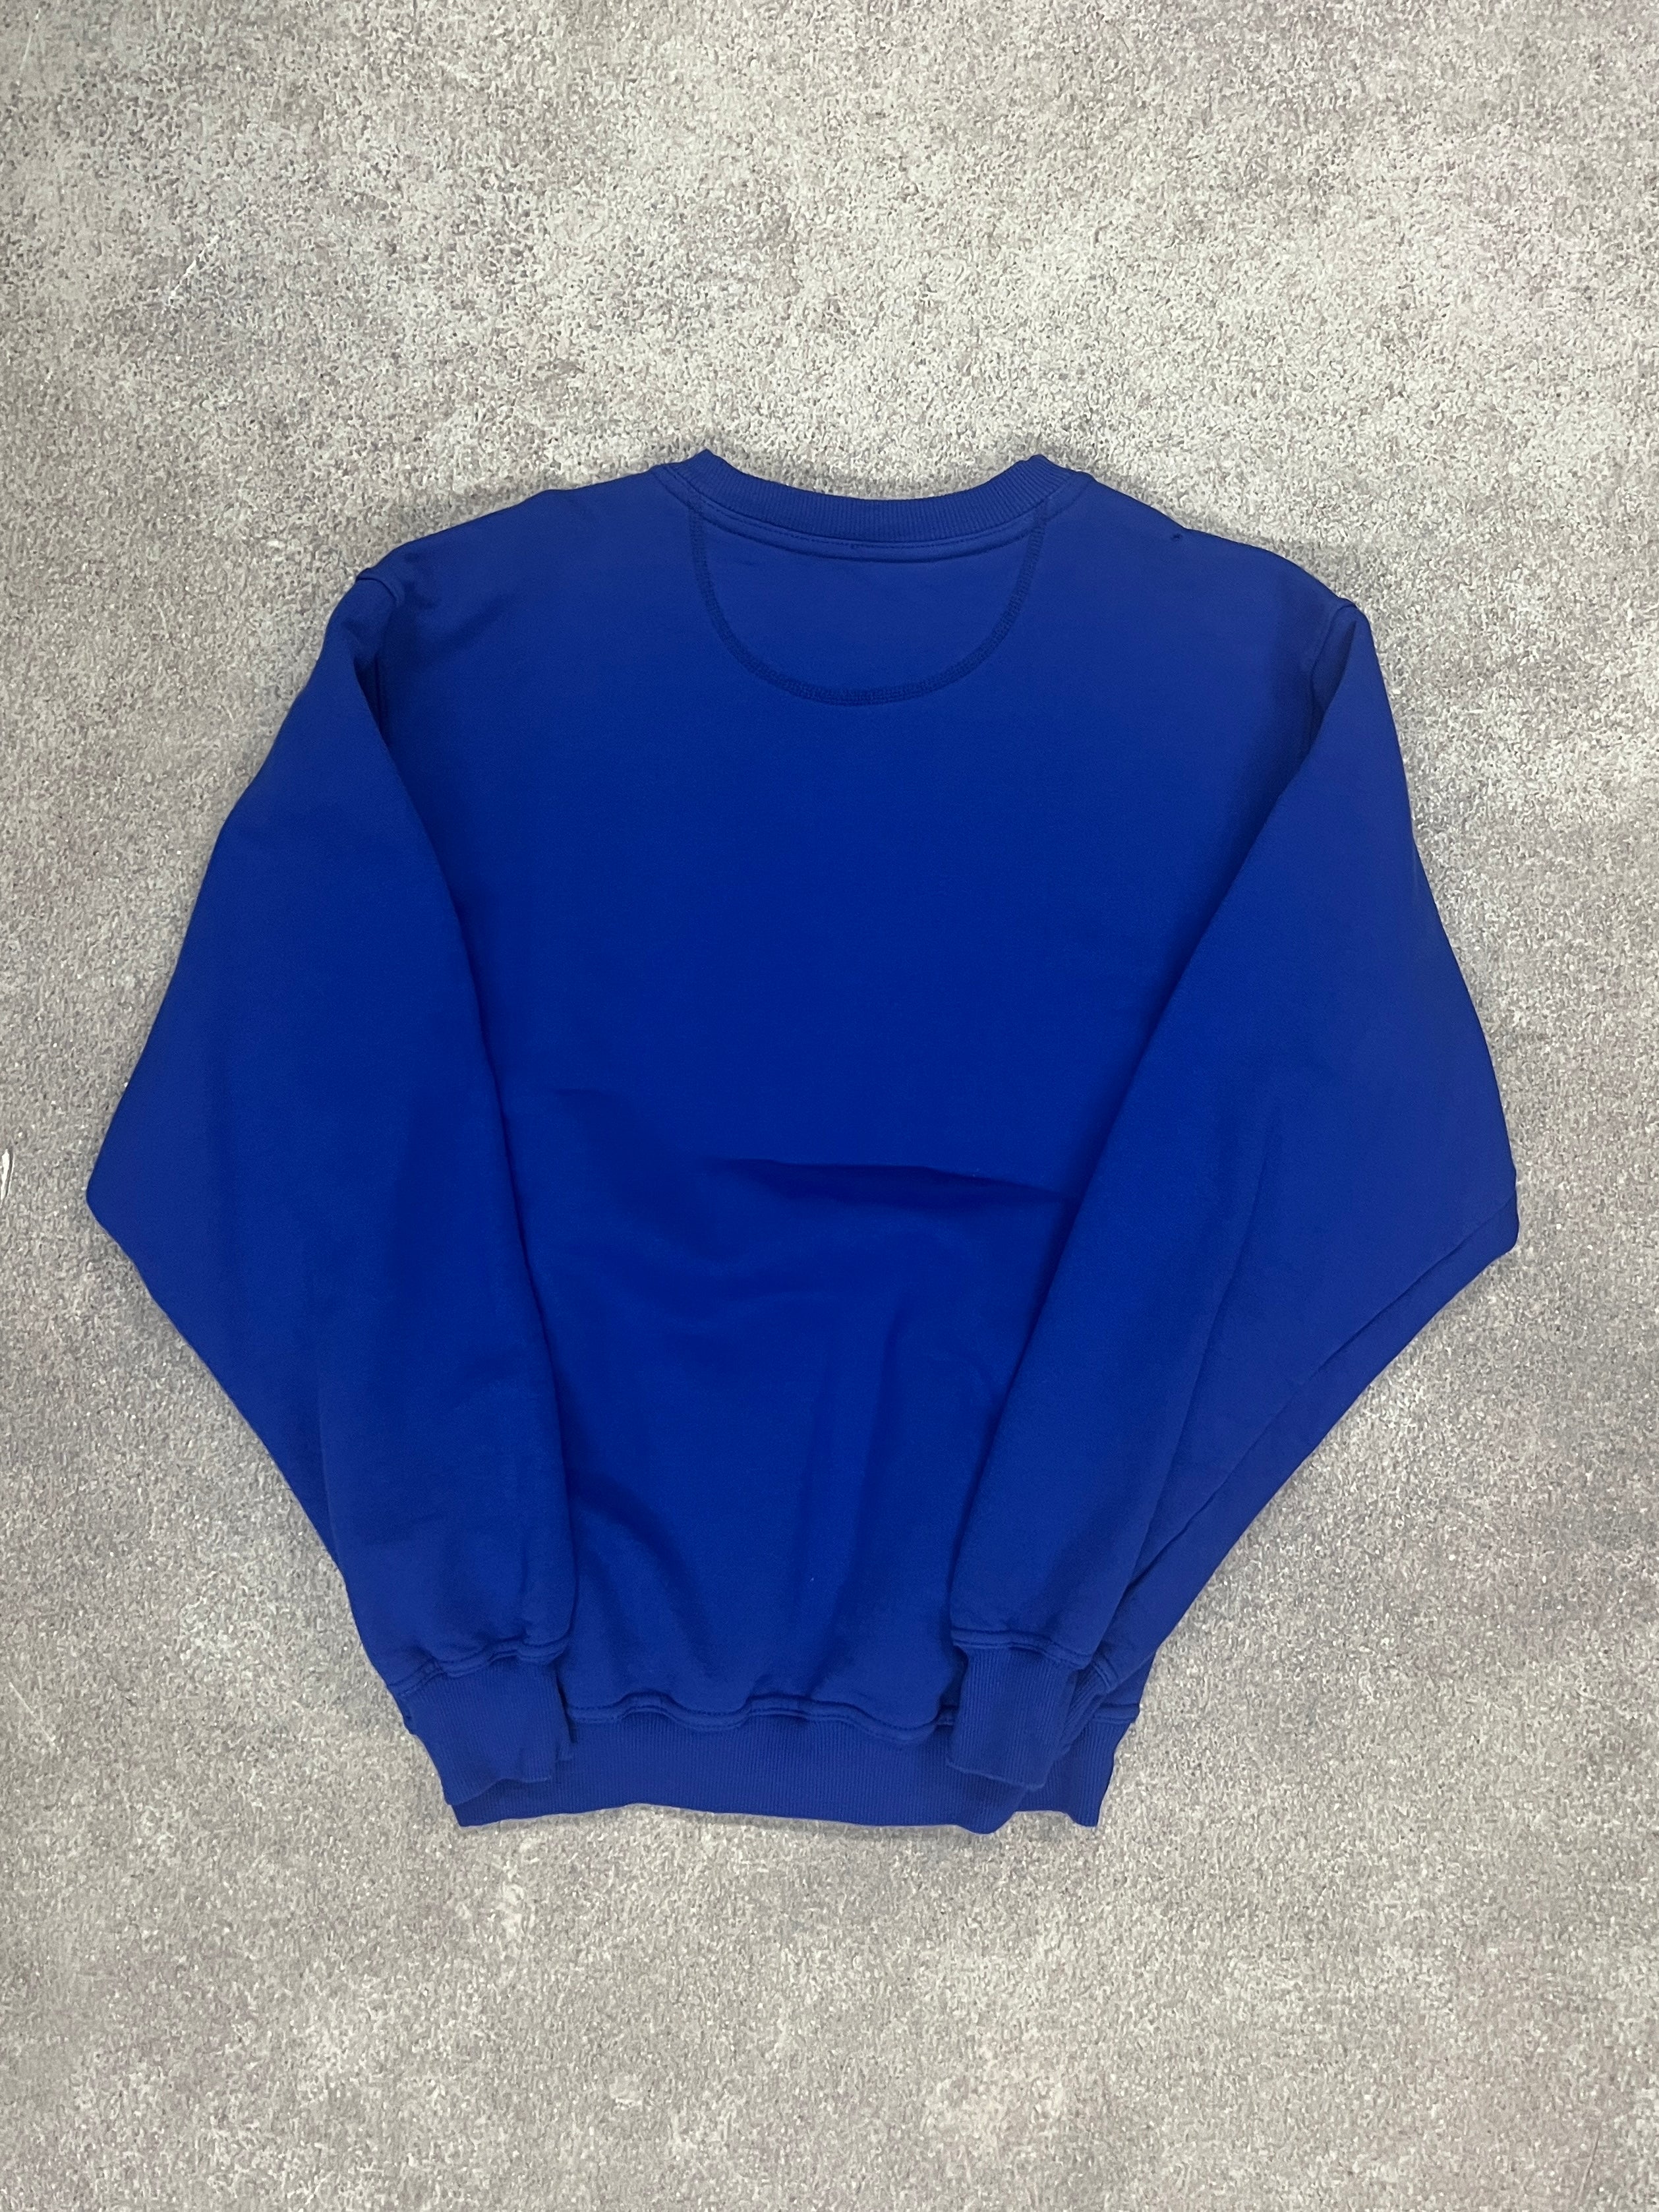 Vintage Blank Sweater Blue // Medium - RHAGHOUSE VINTAGE